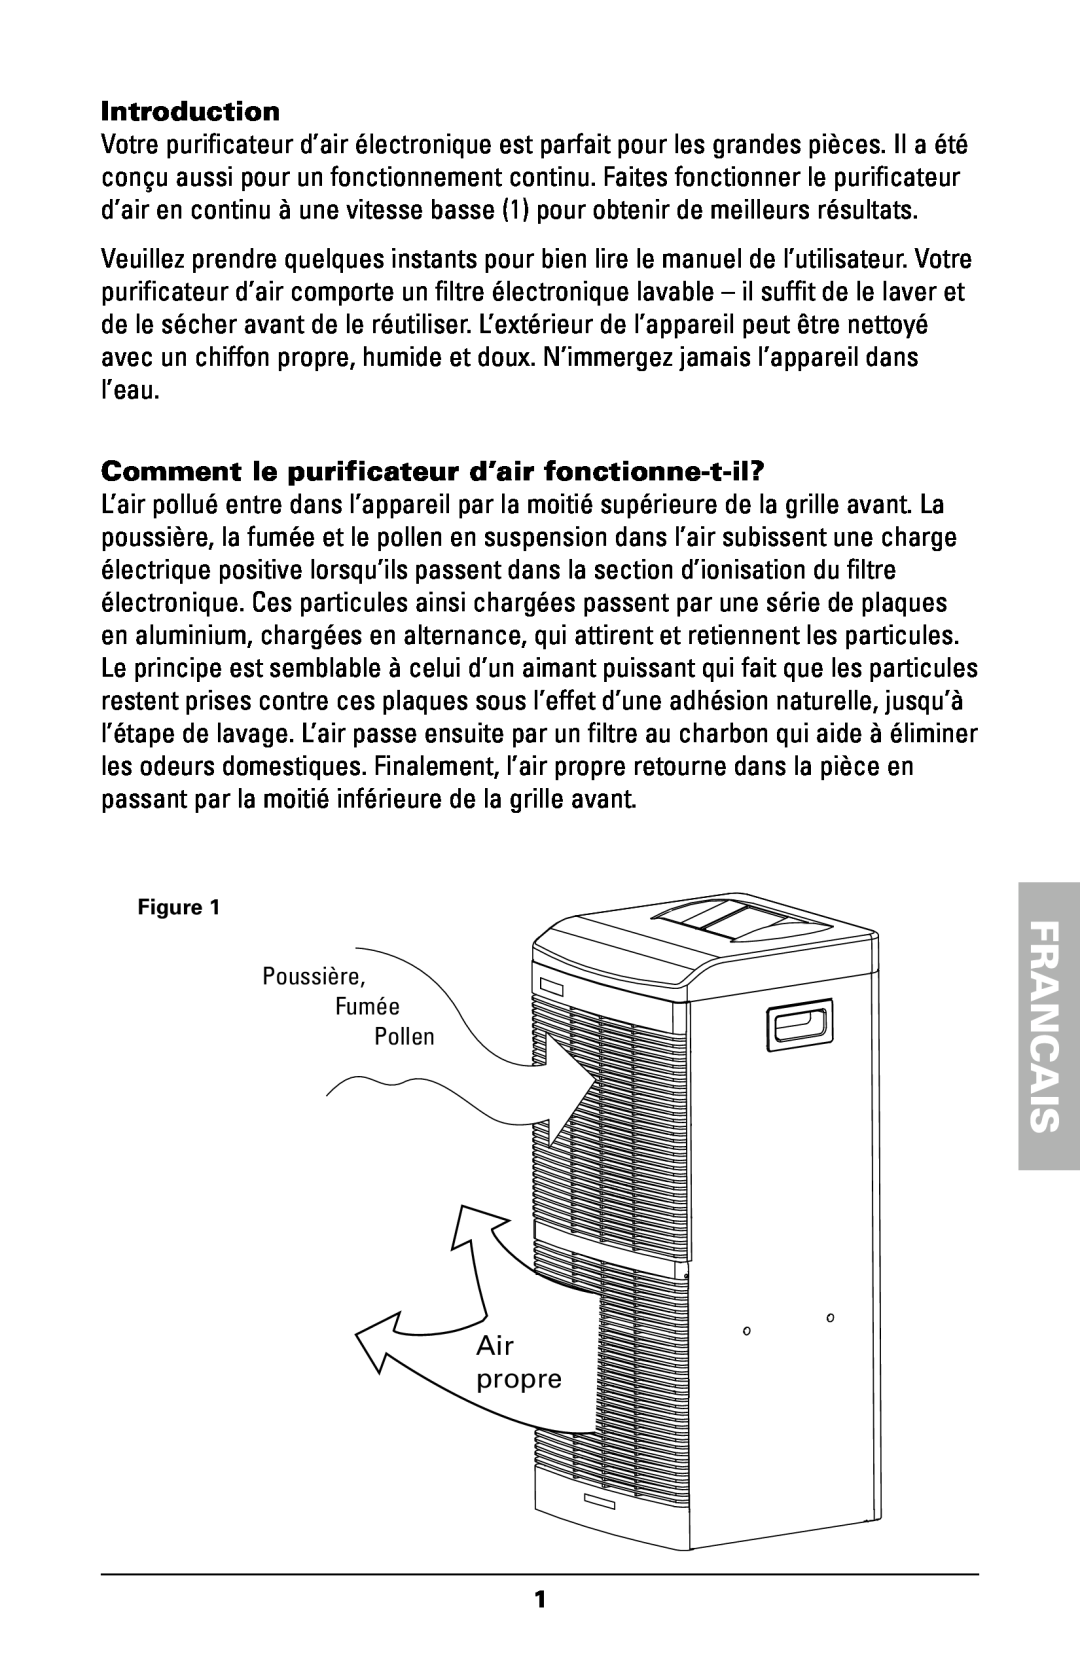 Trion High Efficiency Console Electronic Air Purifier manual Francais, Introduction, Air propre 